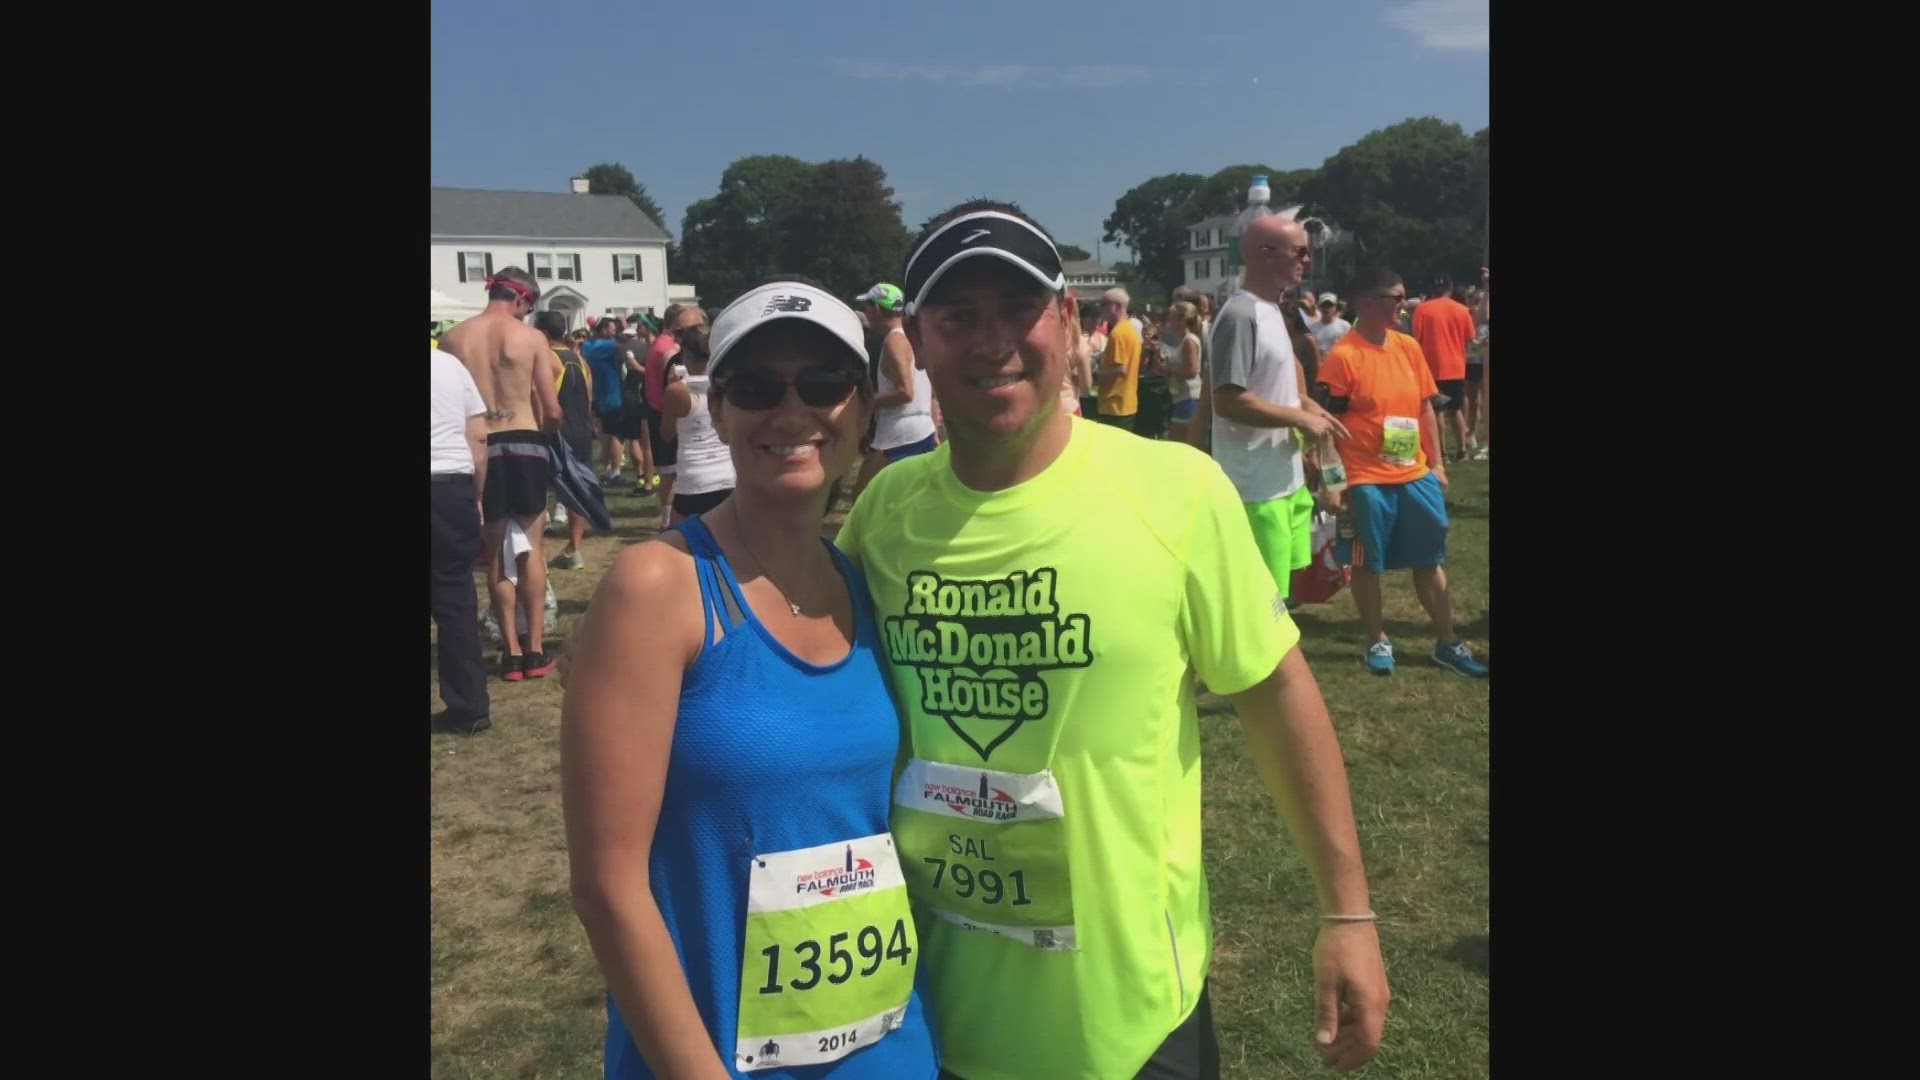 So far, Sal Napoli has raised $33,000 for the RMHC through his participation in the Boston Marathon.